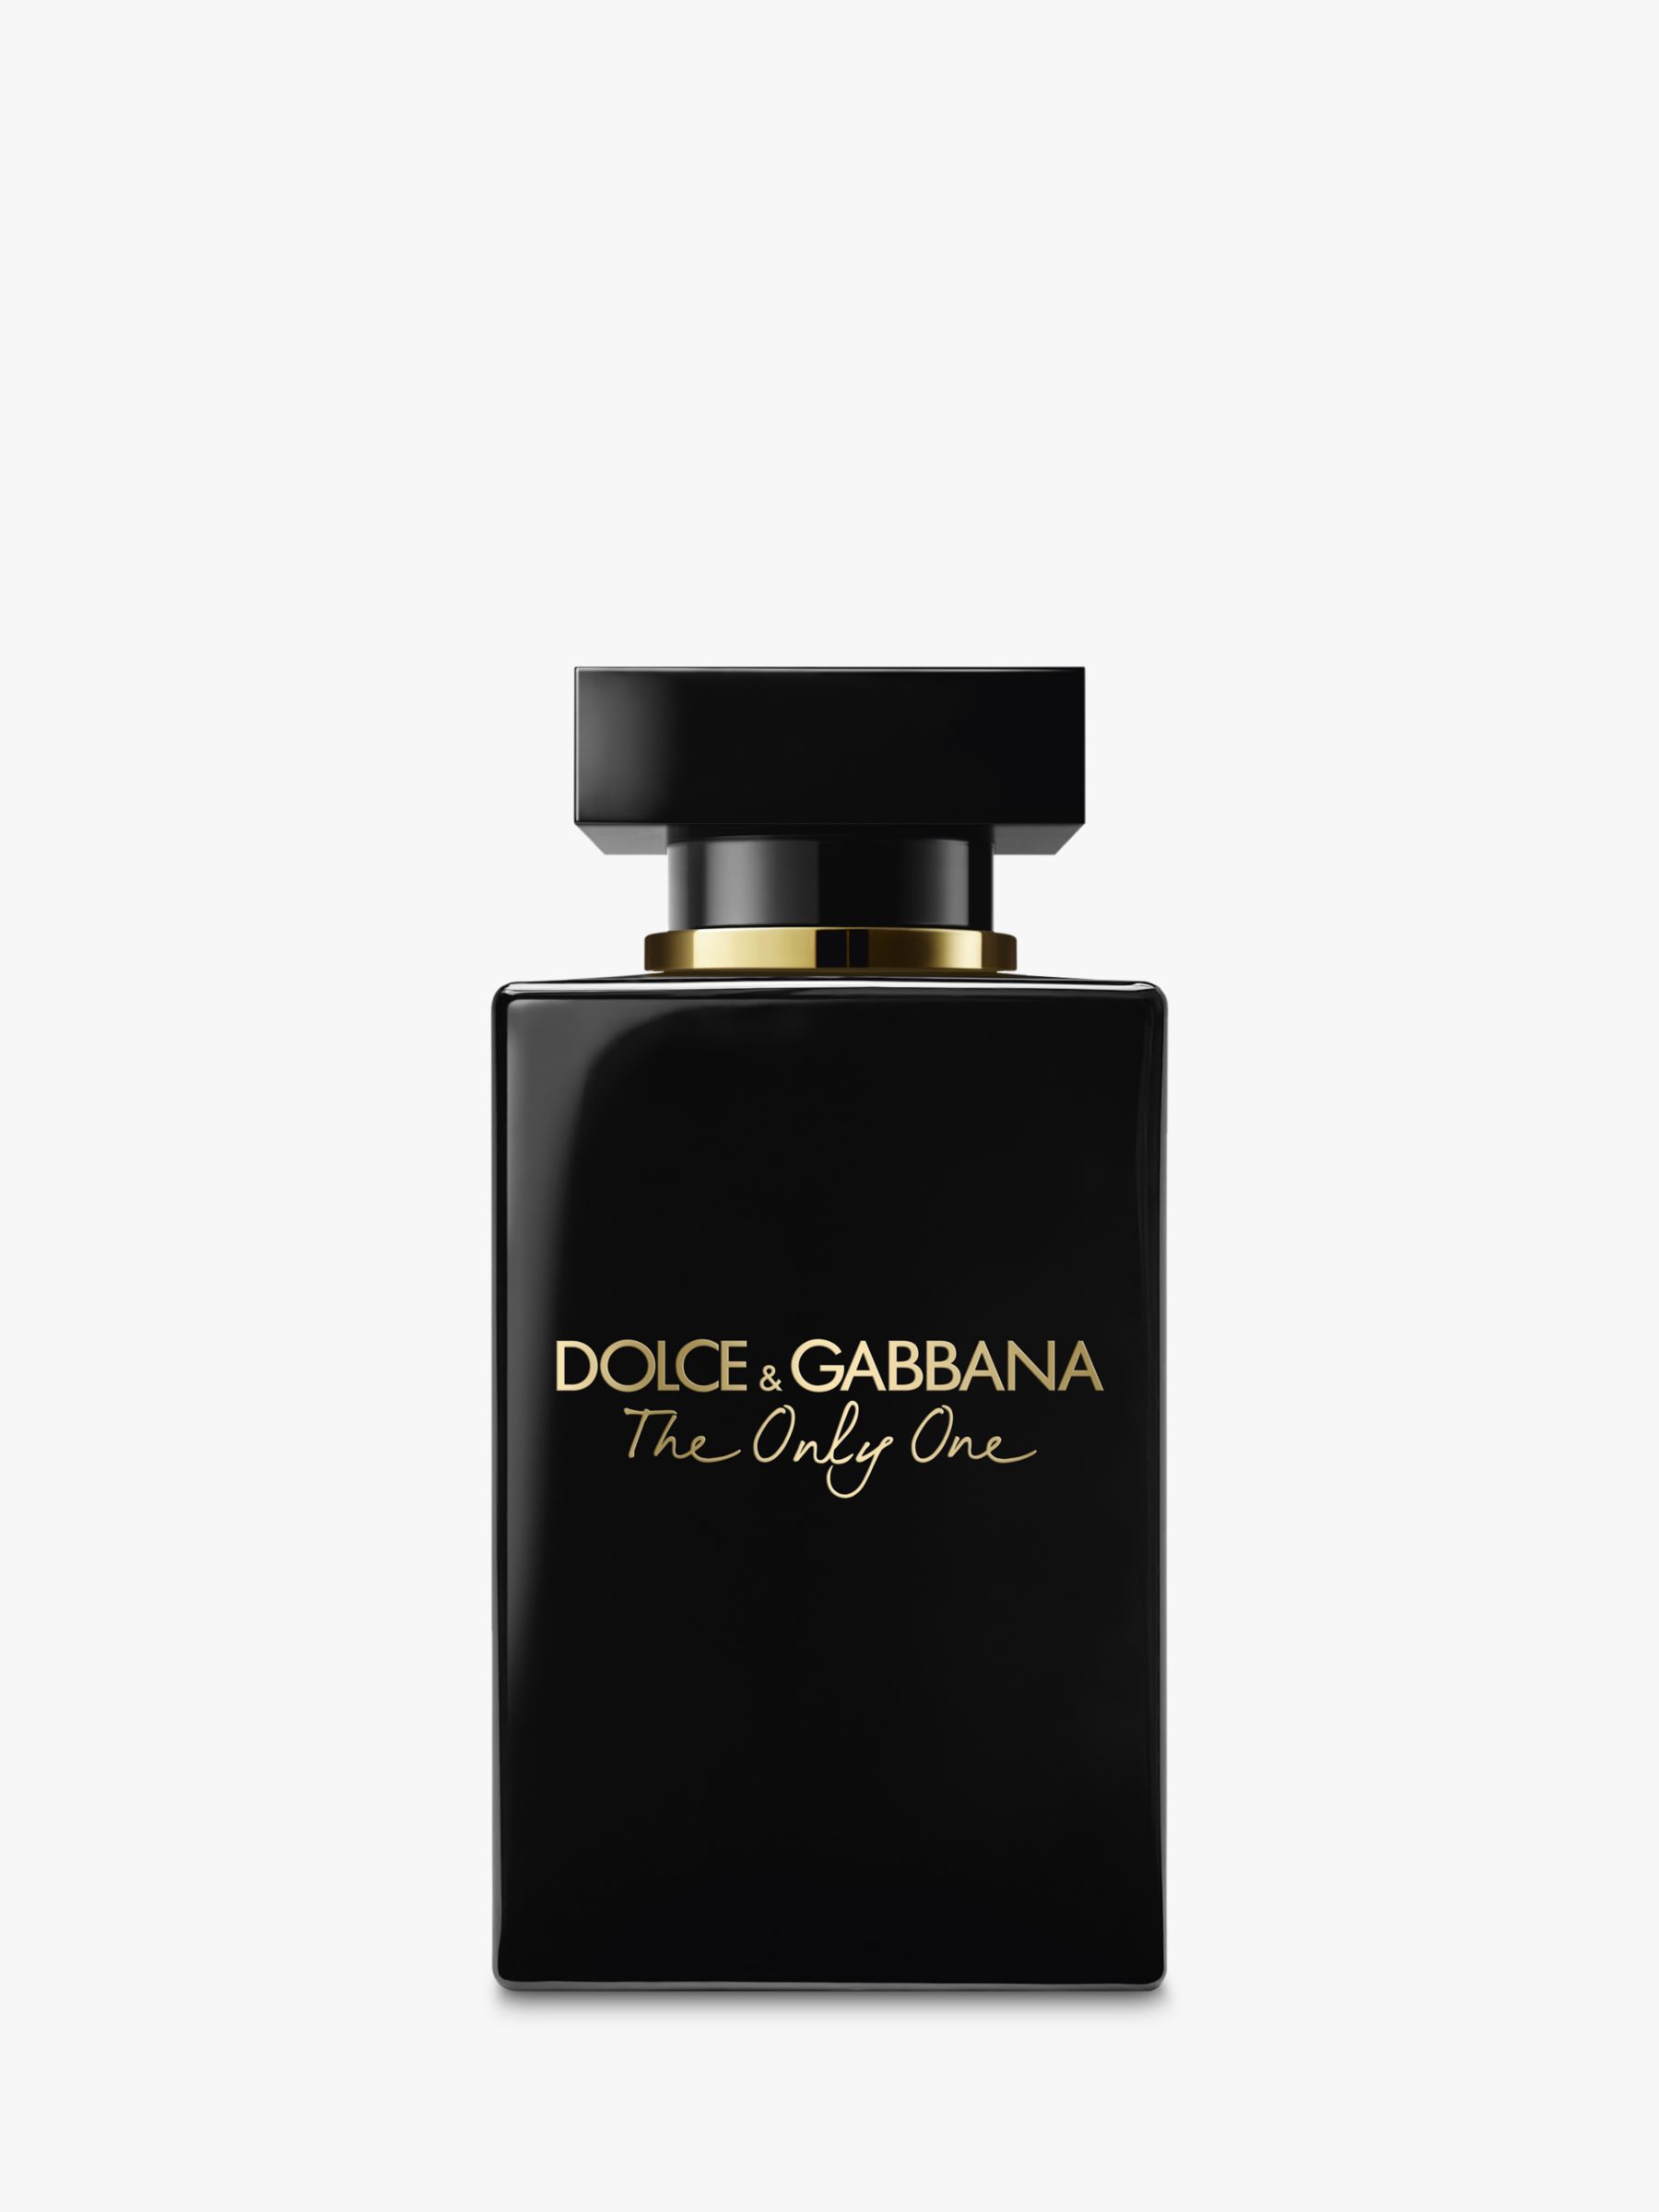 Dolce & Gabbana The Only One Eau de Parfum Intense, 30ml at John Lewis &  Partners